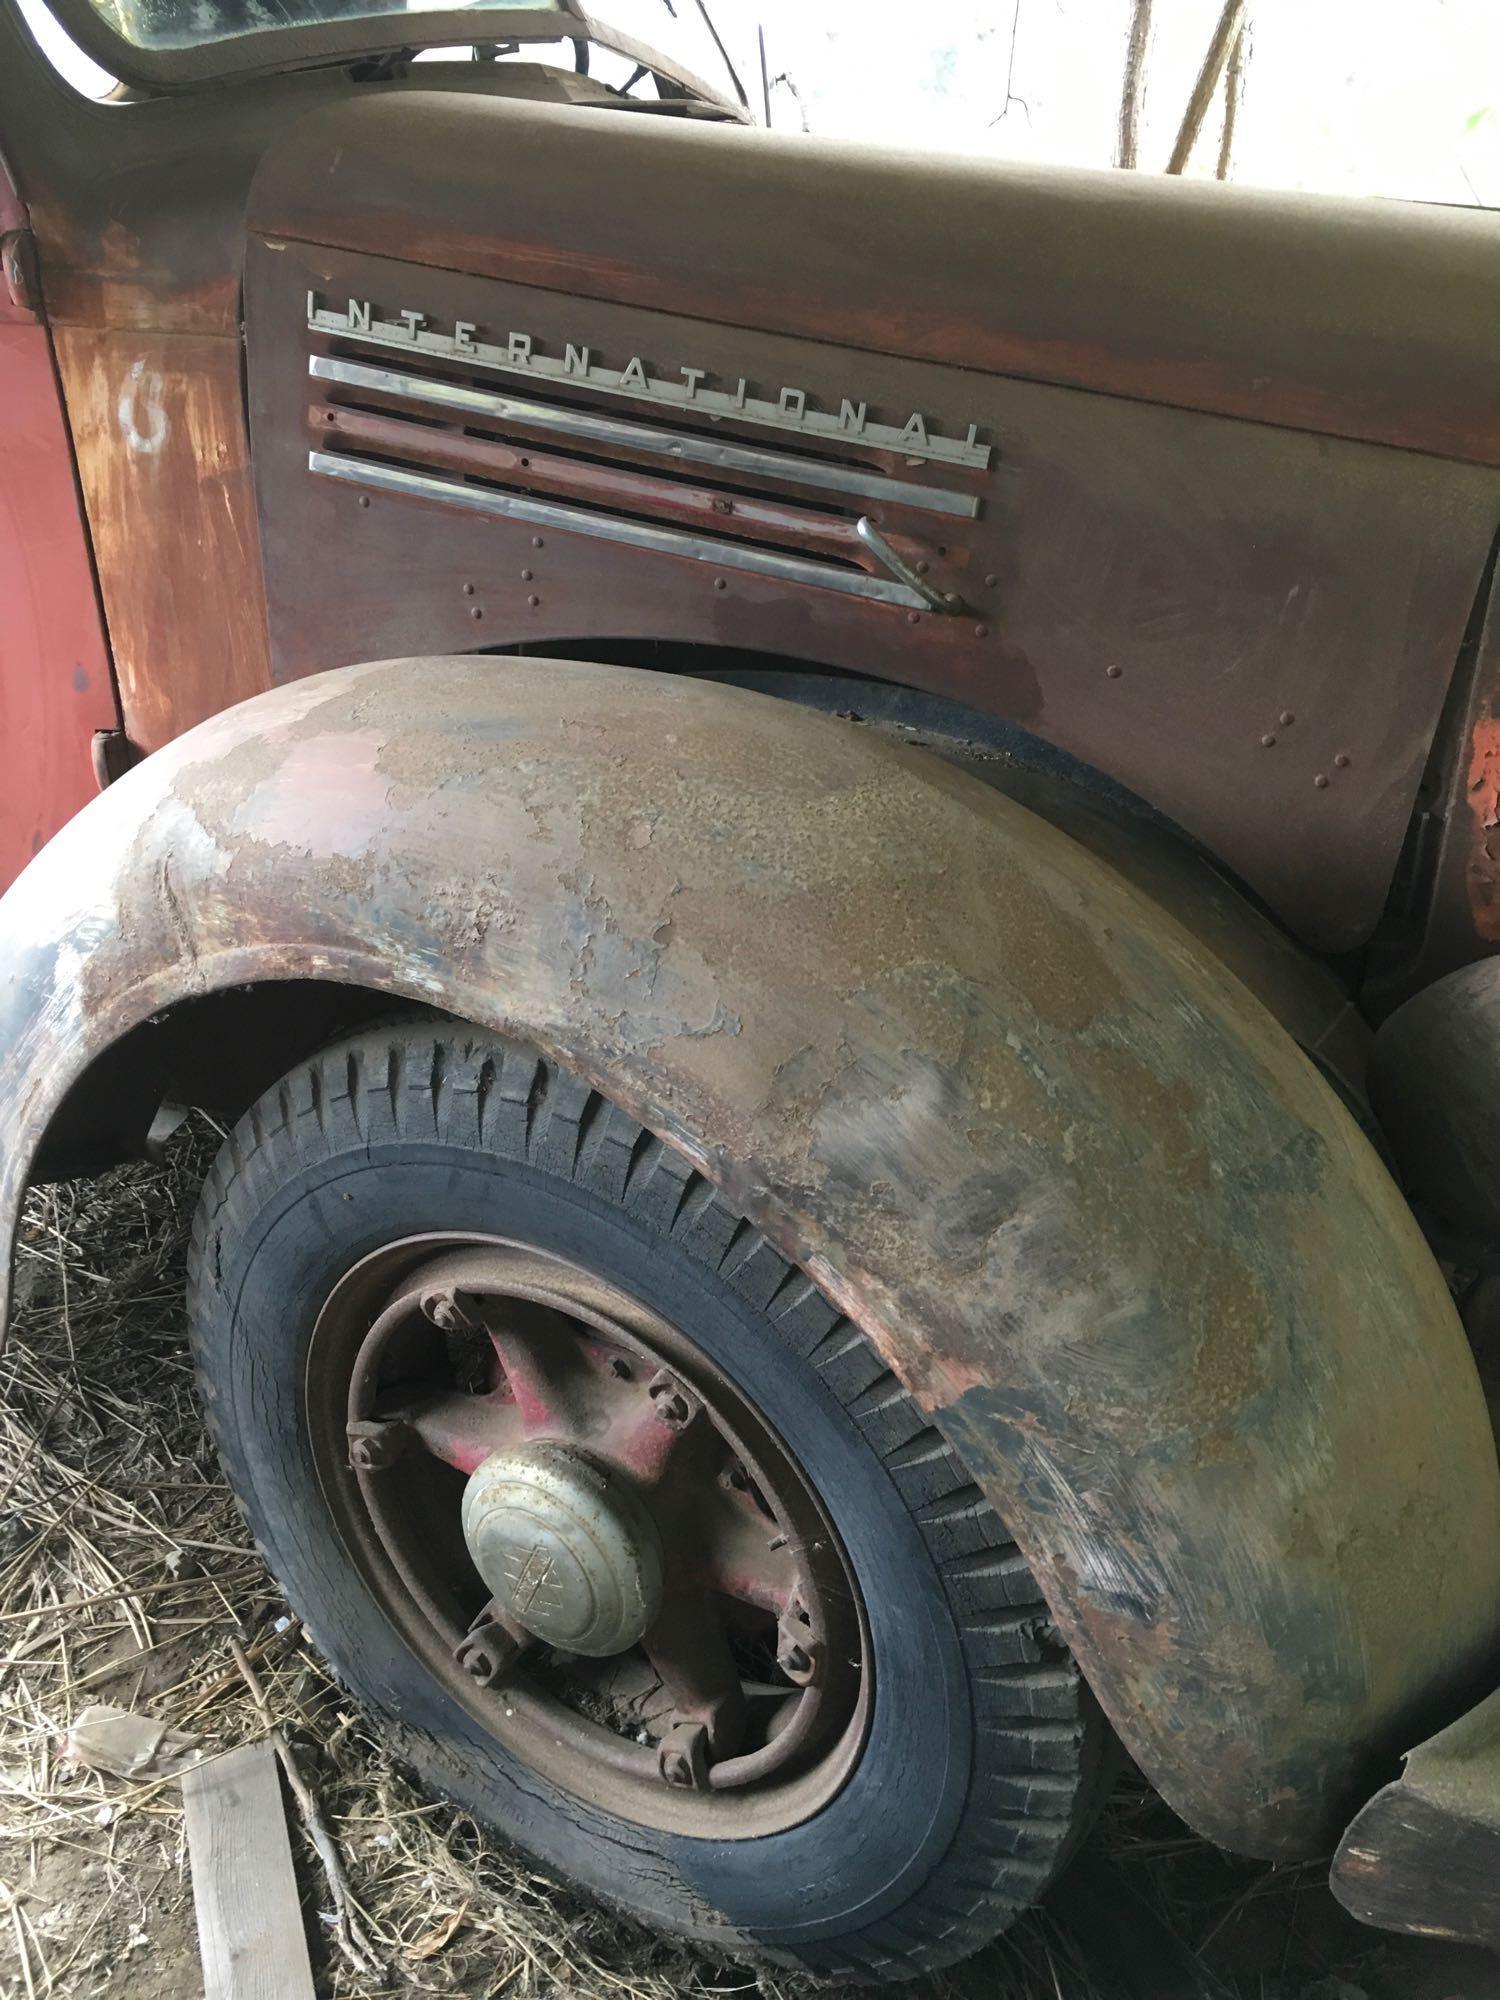 1941 International Flatbed truck. Vin # 3680 - MOTOR RUNS - SOLD AS IS